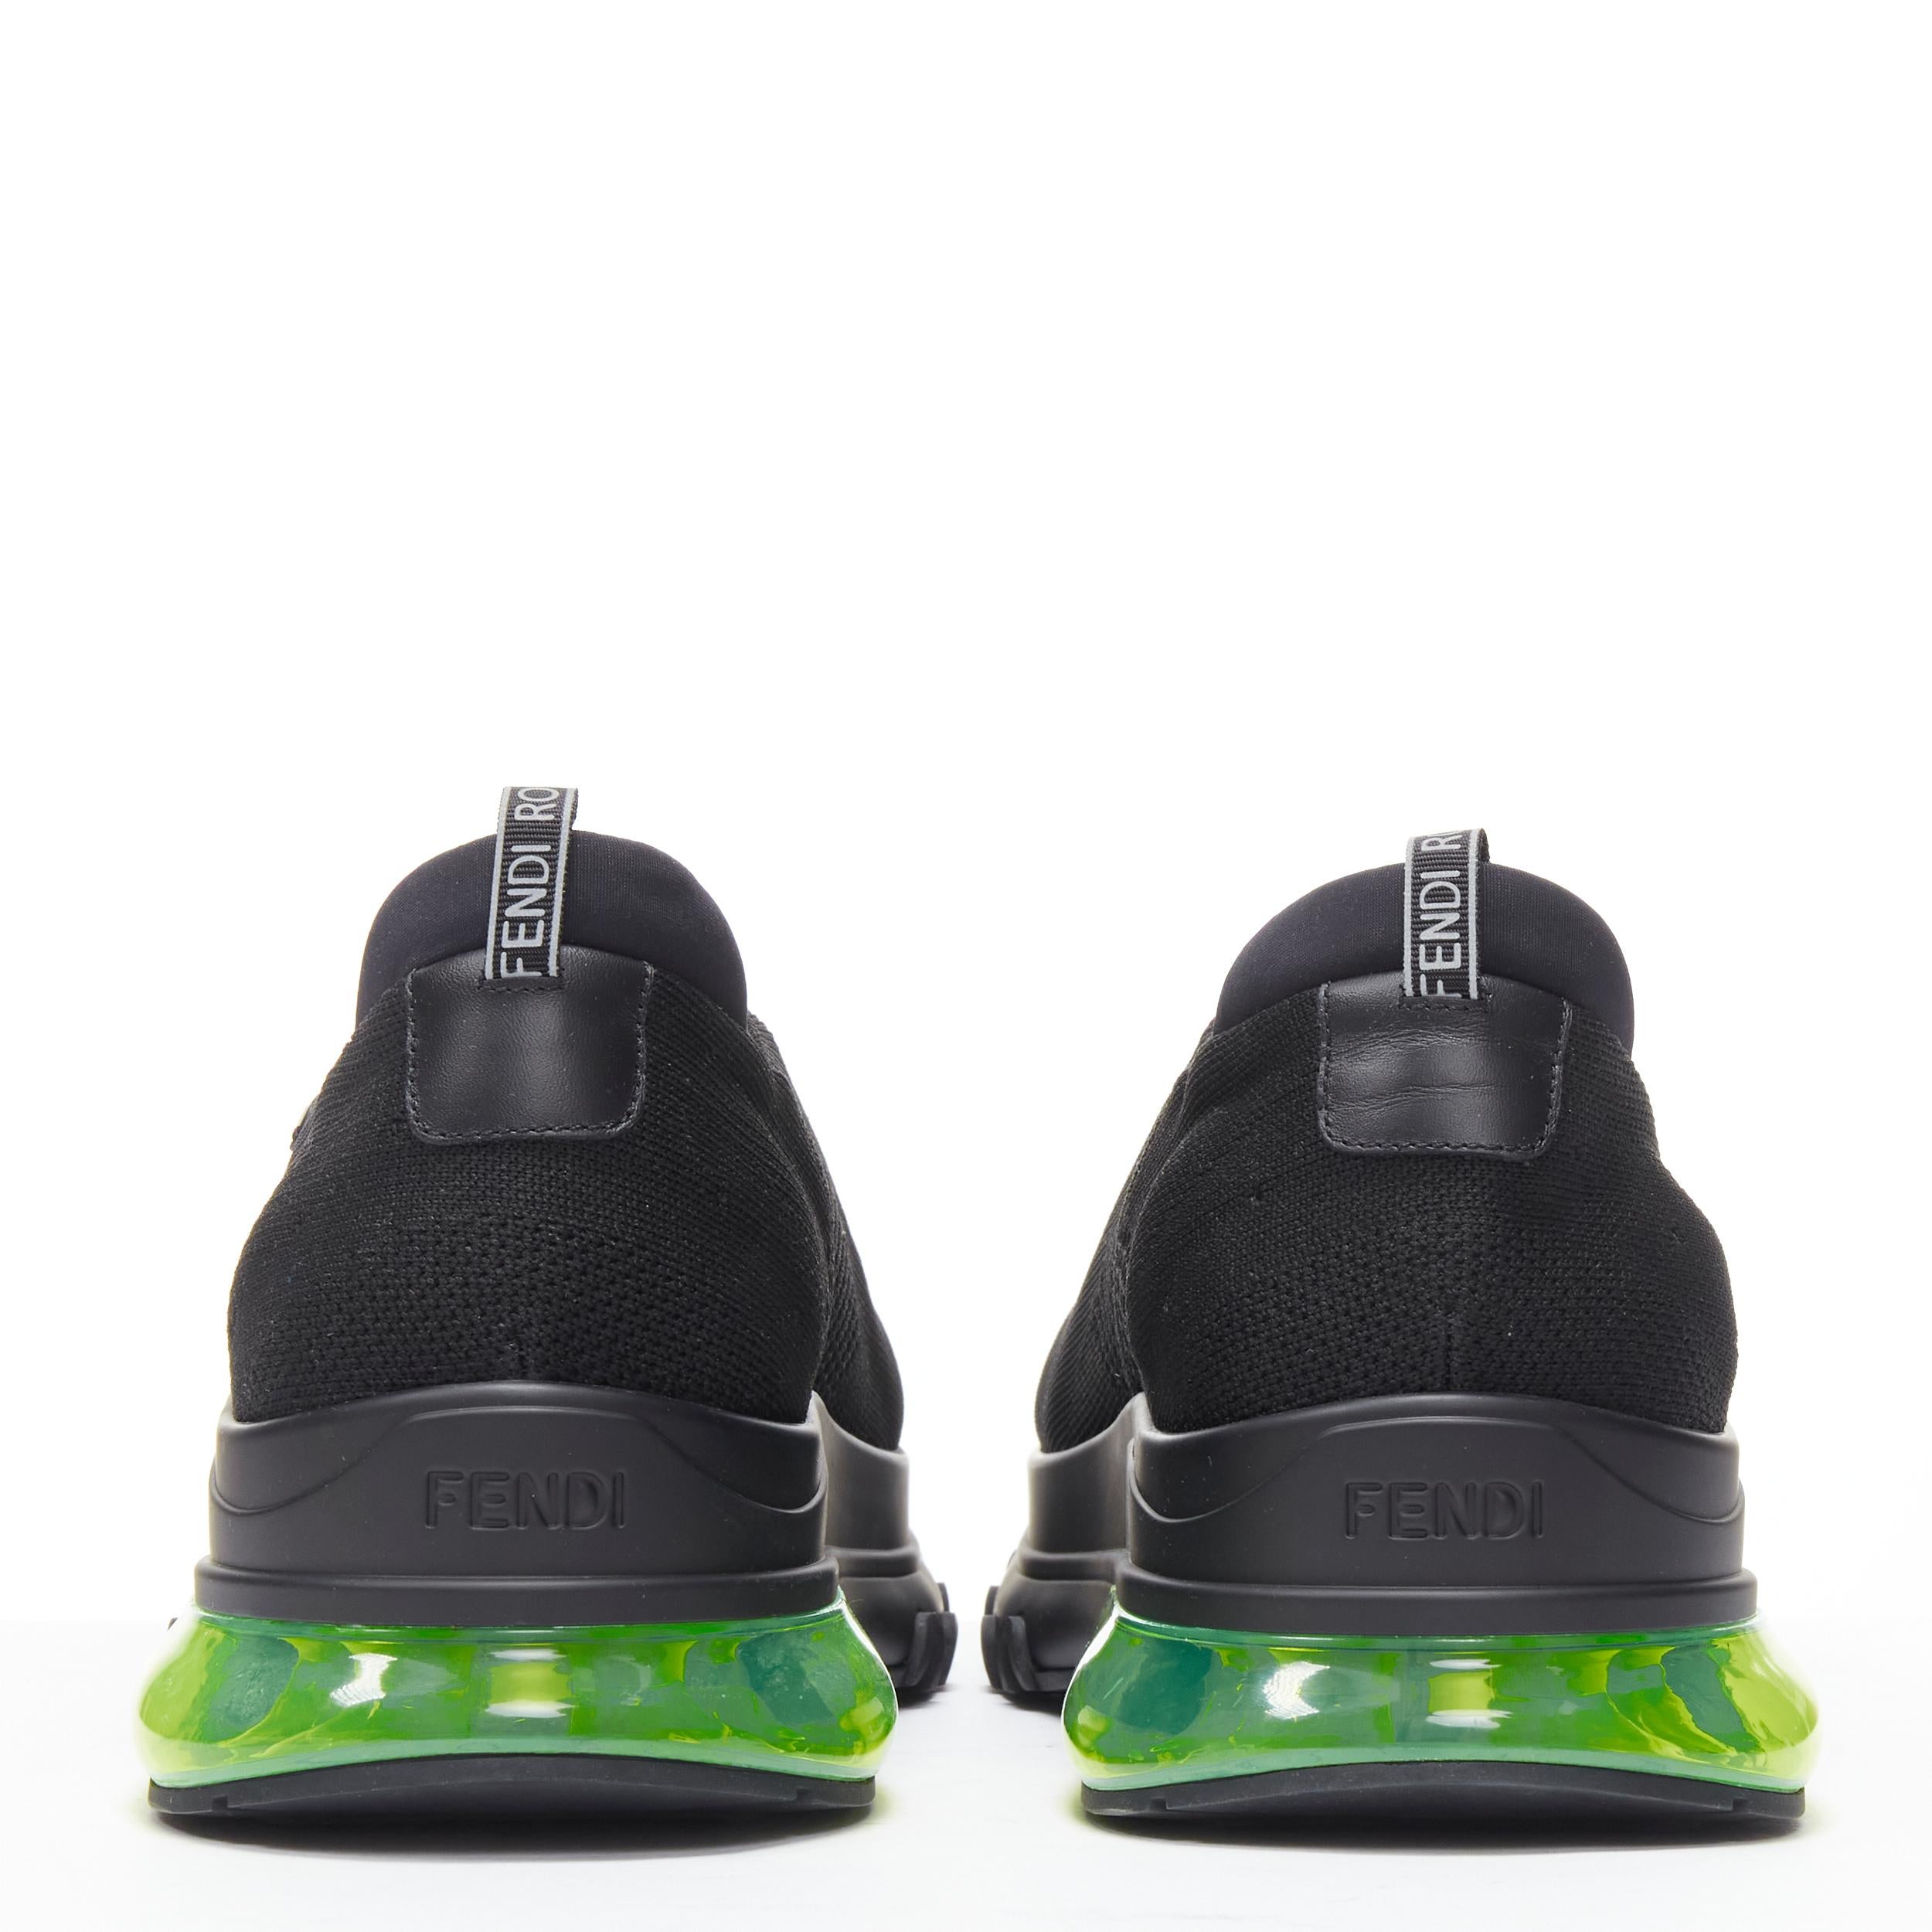 Black new FENDI 2019 black knit neon yellow air sole low runner sneaker 7E1234 EU44 For Sale